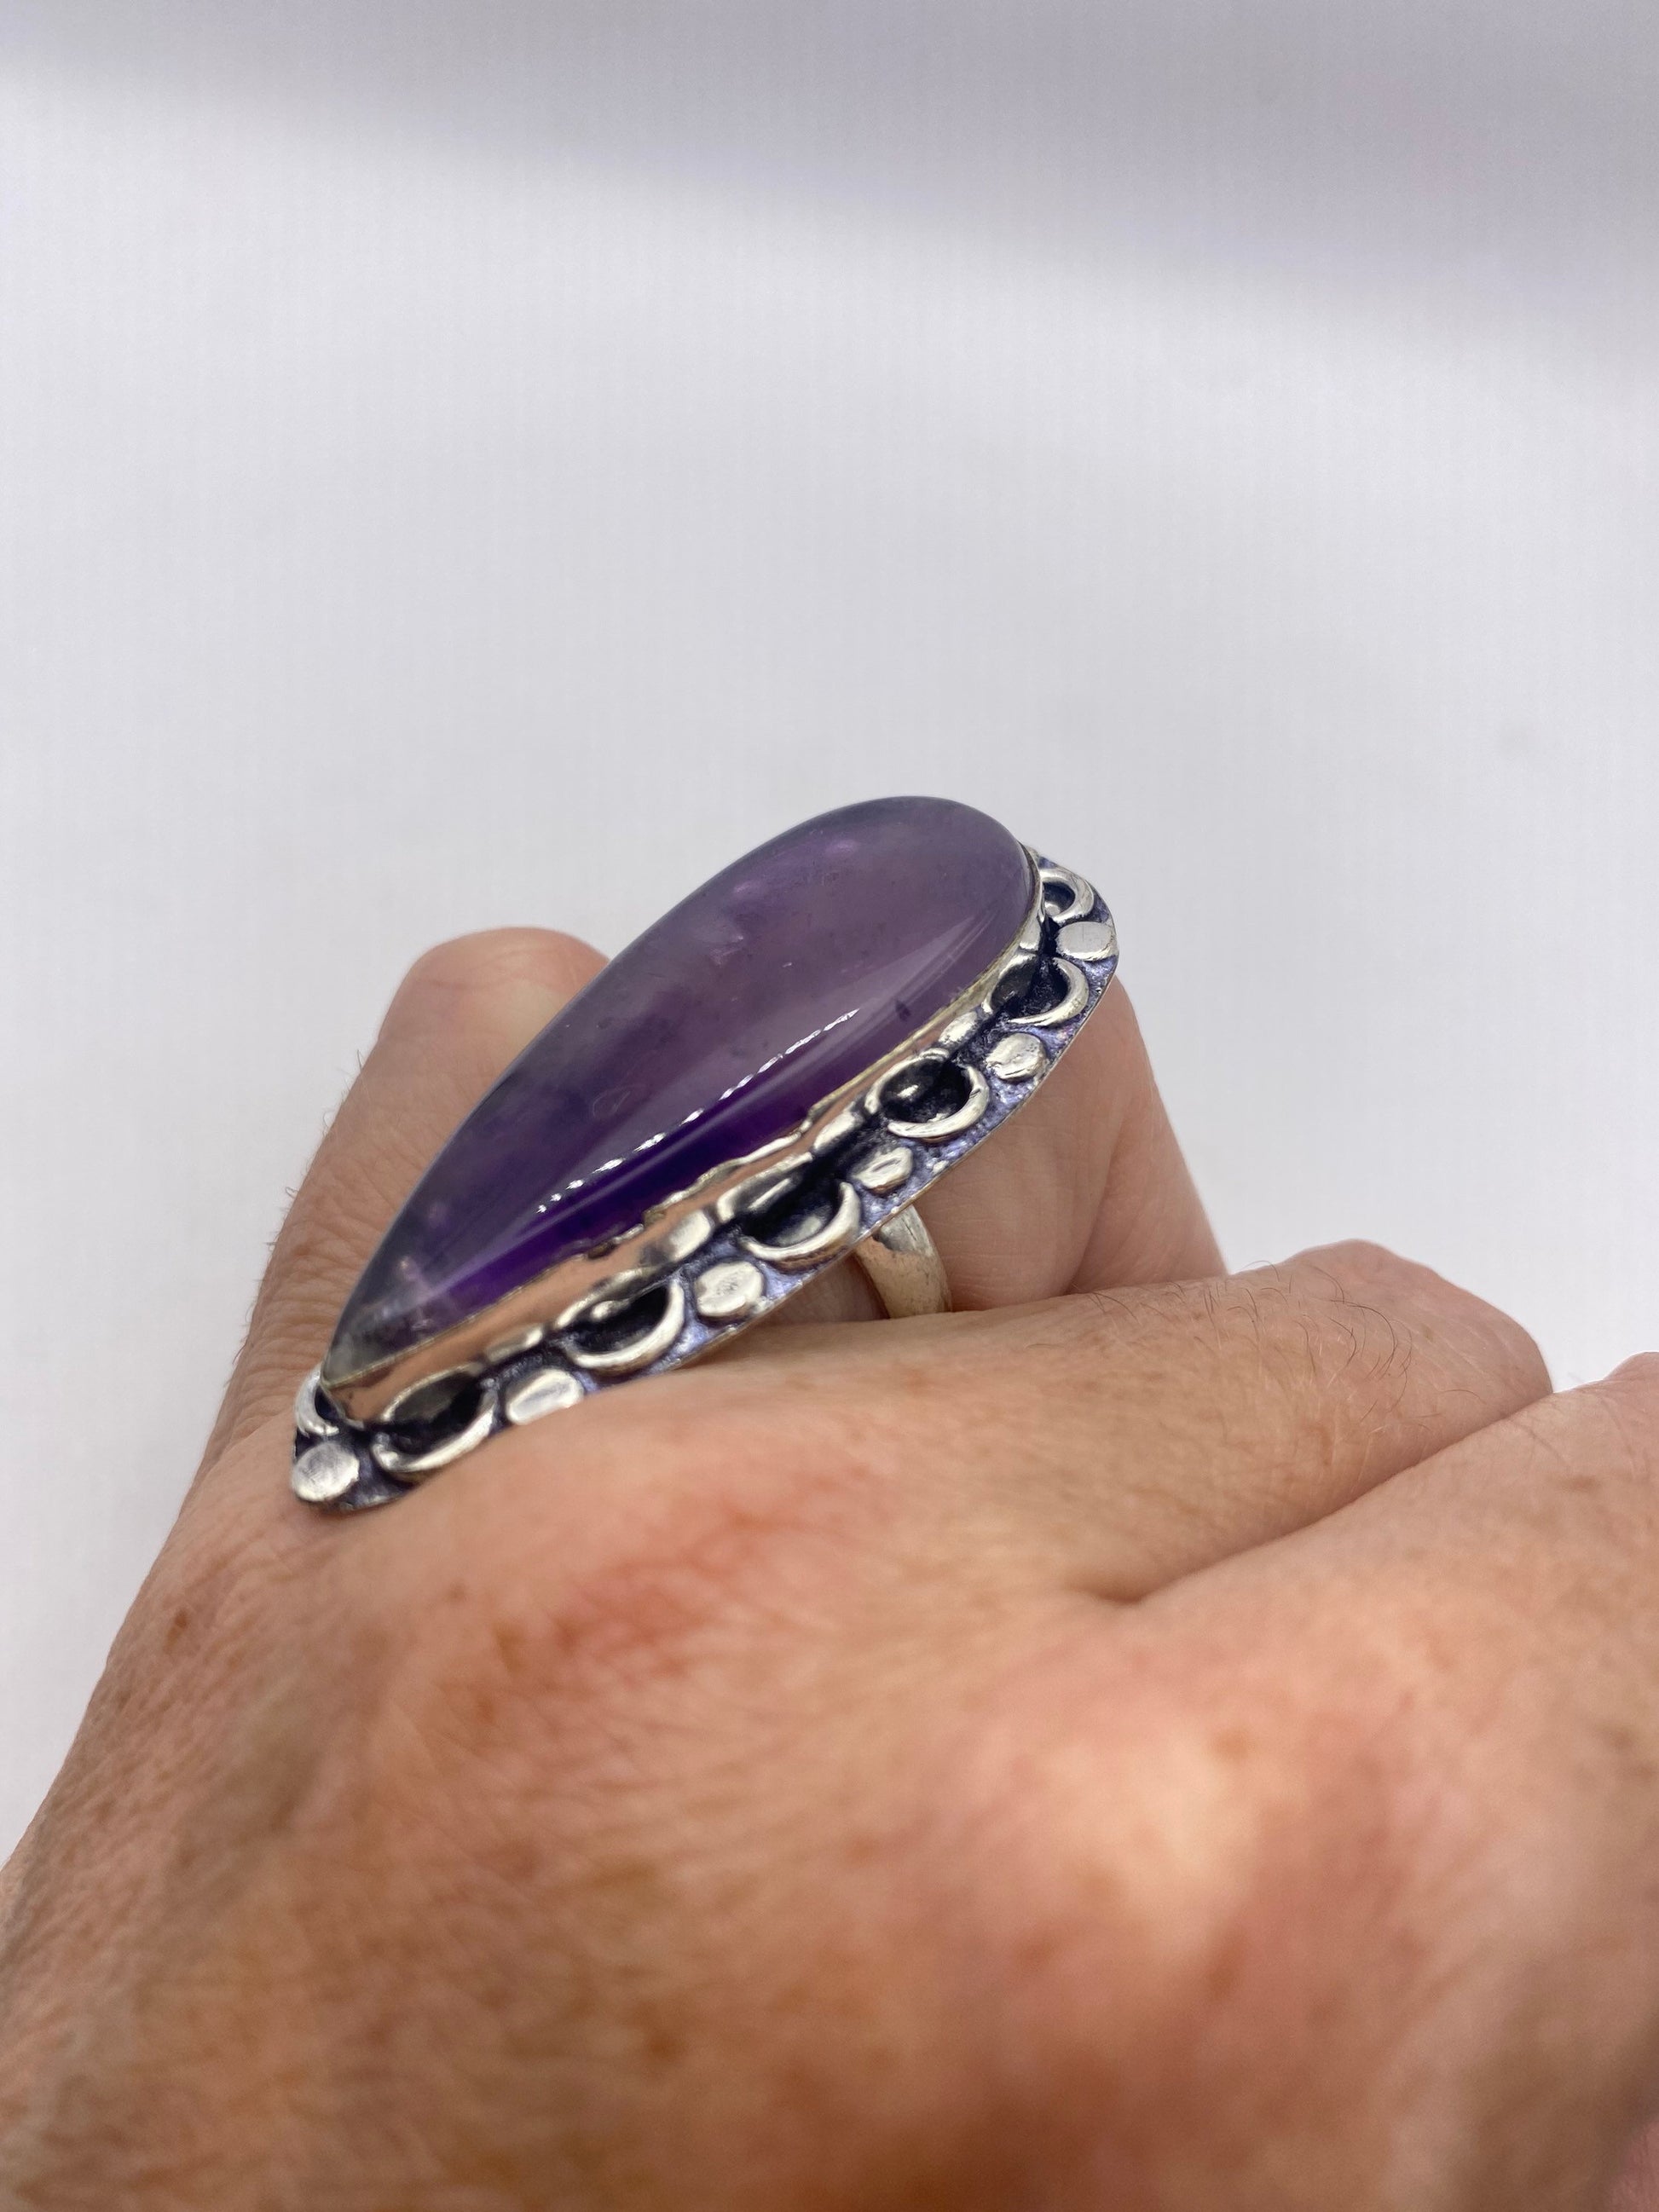 Vintage Boho Purple Amethyst Cocktail Ring Size 5.25